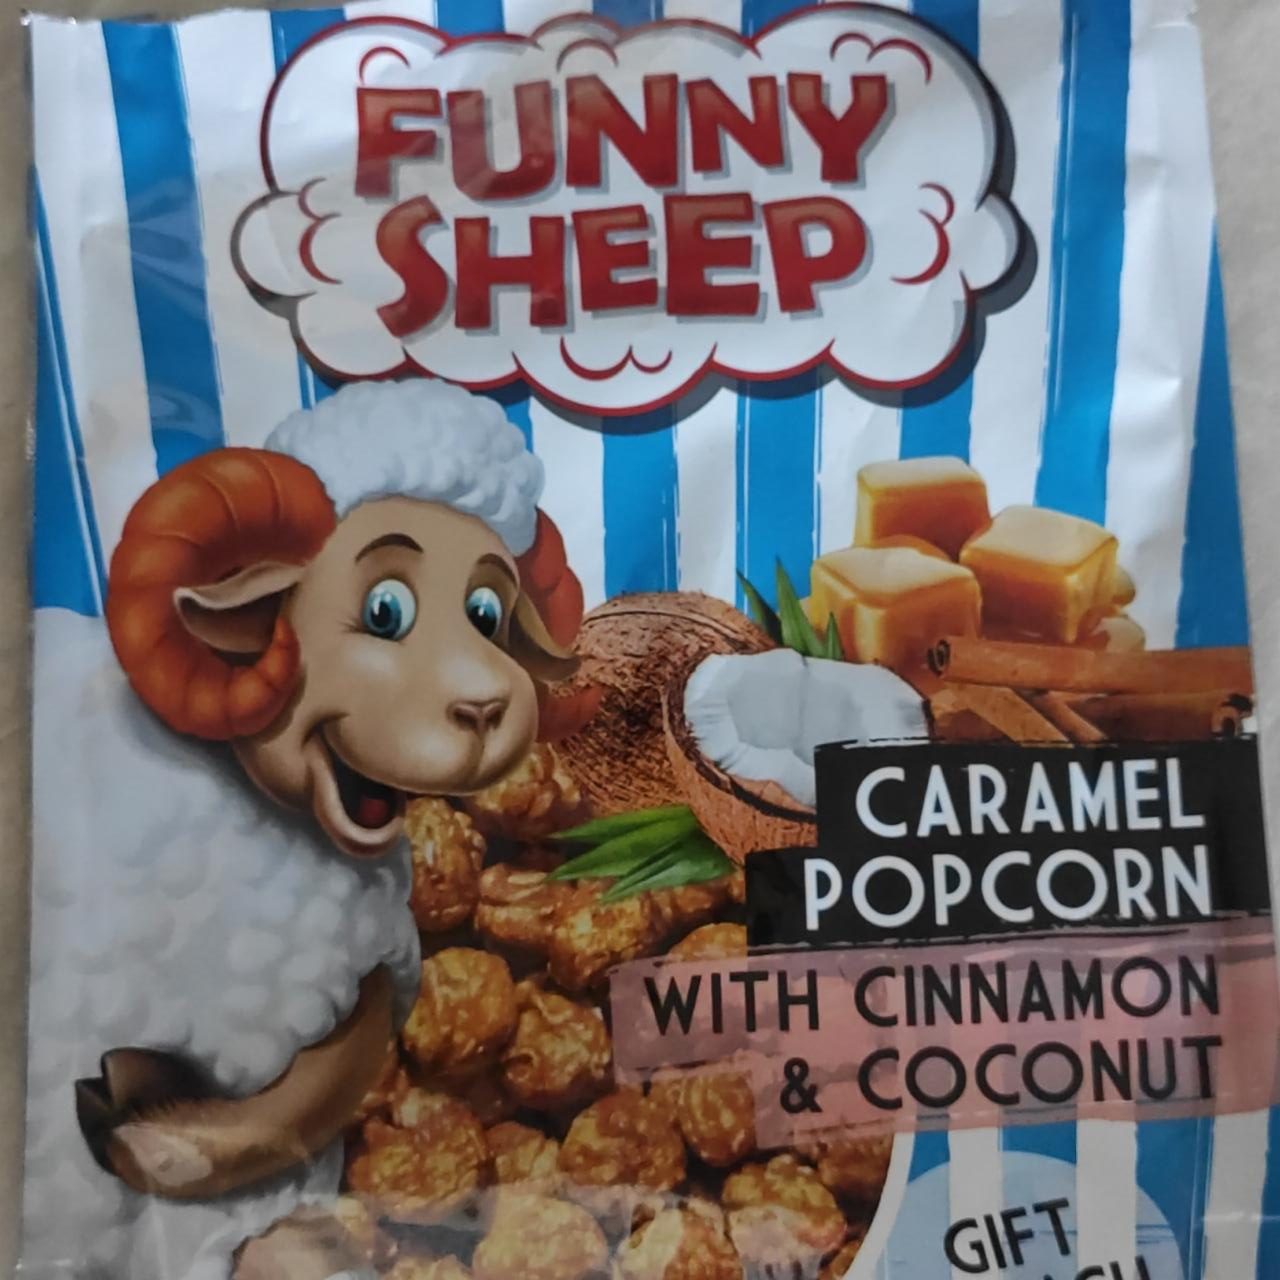 Фото - попкорн в карамели с корицей и кокосом Funny Sheep